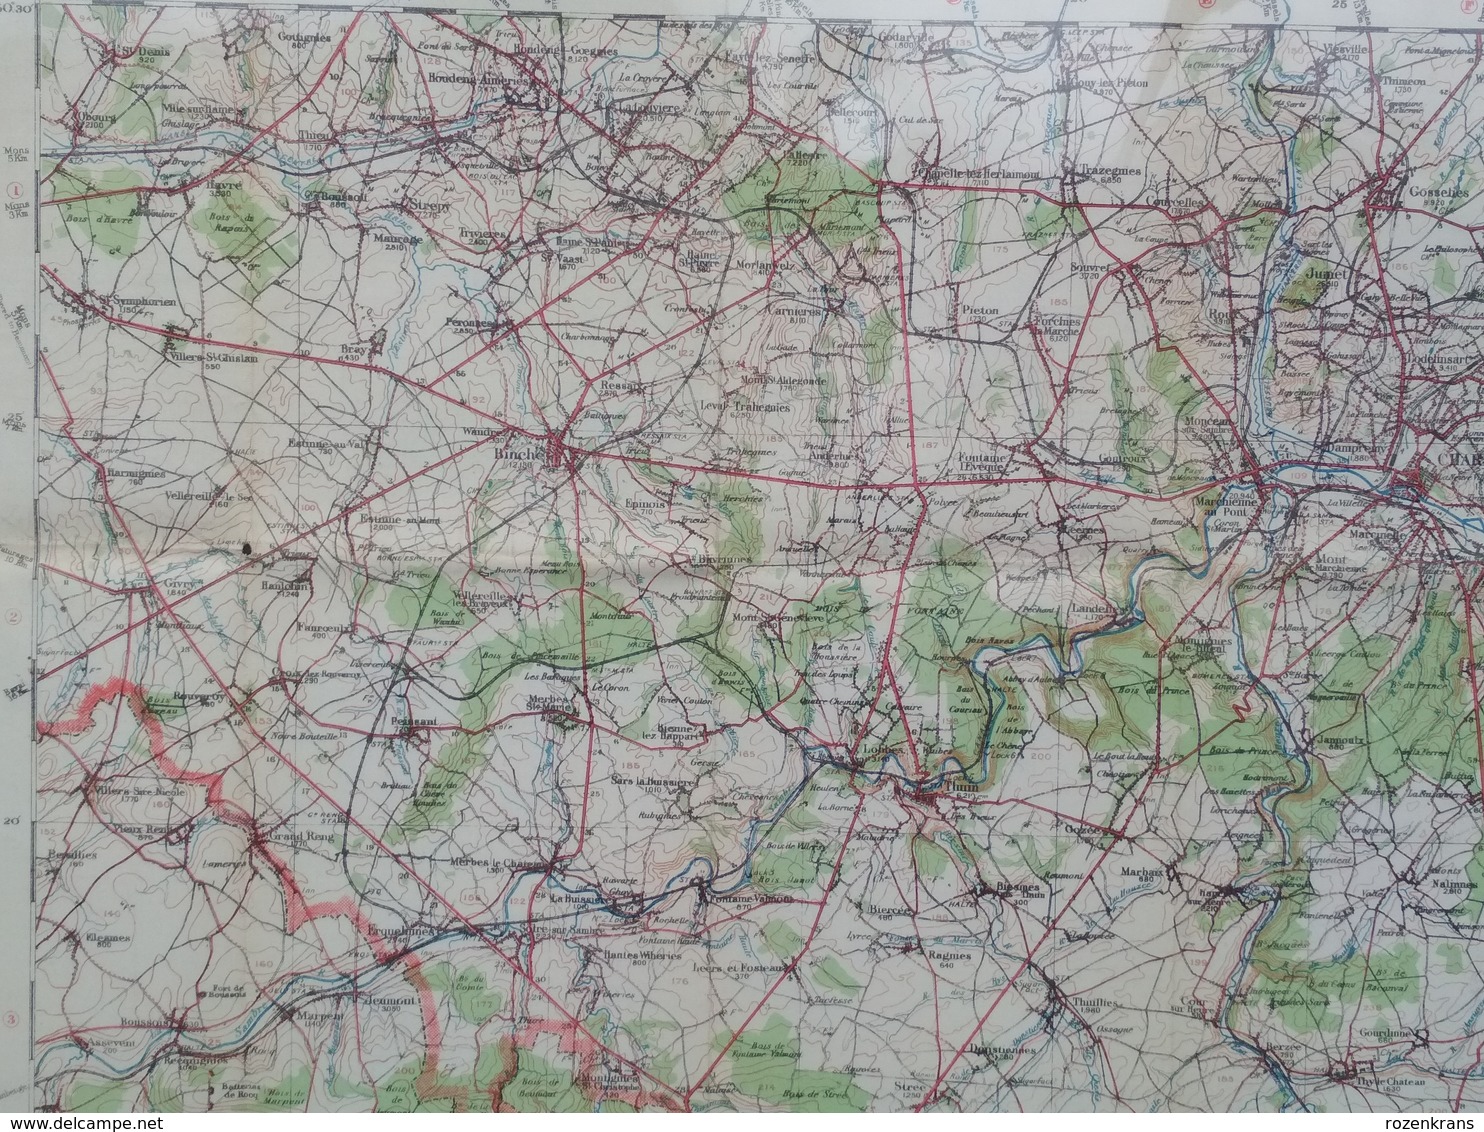 Topografische en militaire kaart STAFKAART 1916 UK War Office WW1 WWI Charleroi Namur Dinant Givet Chatelet